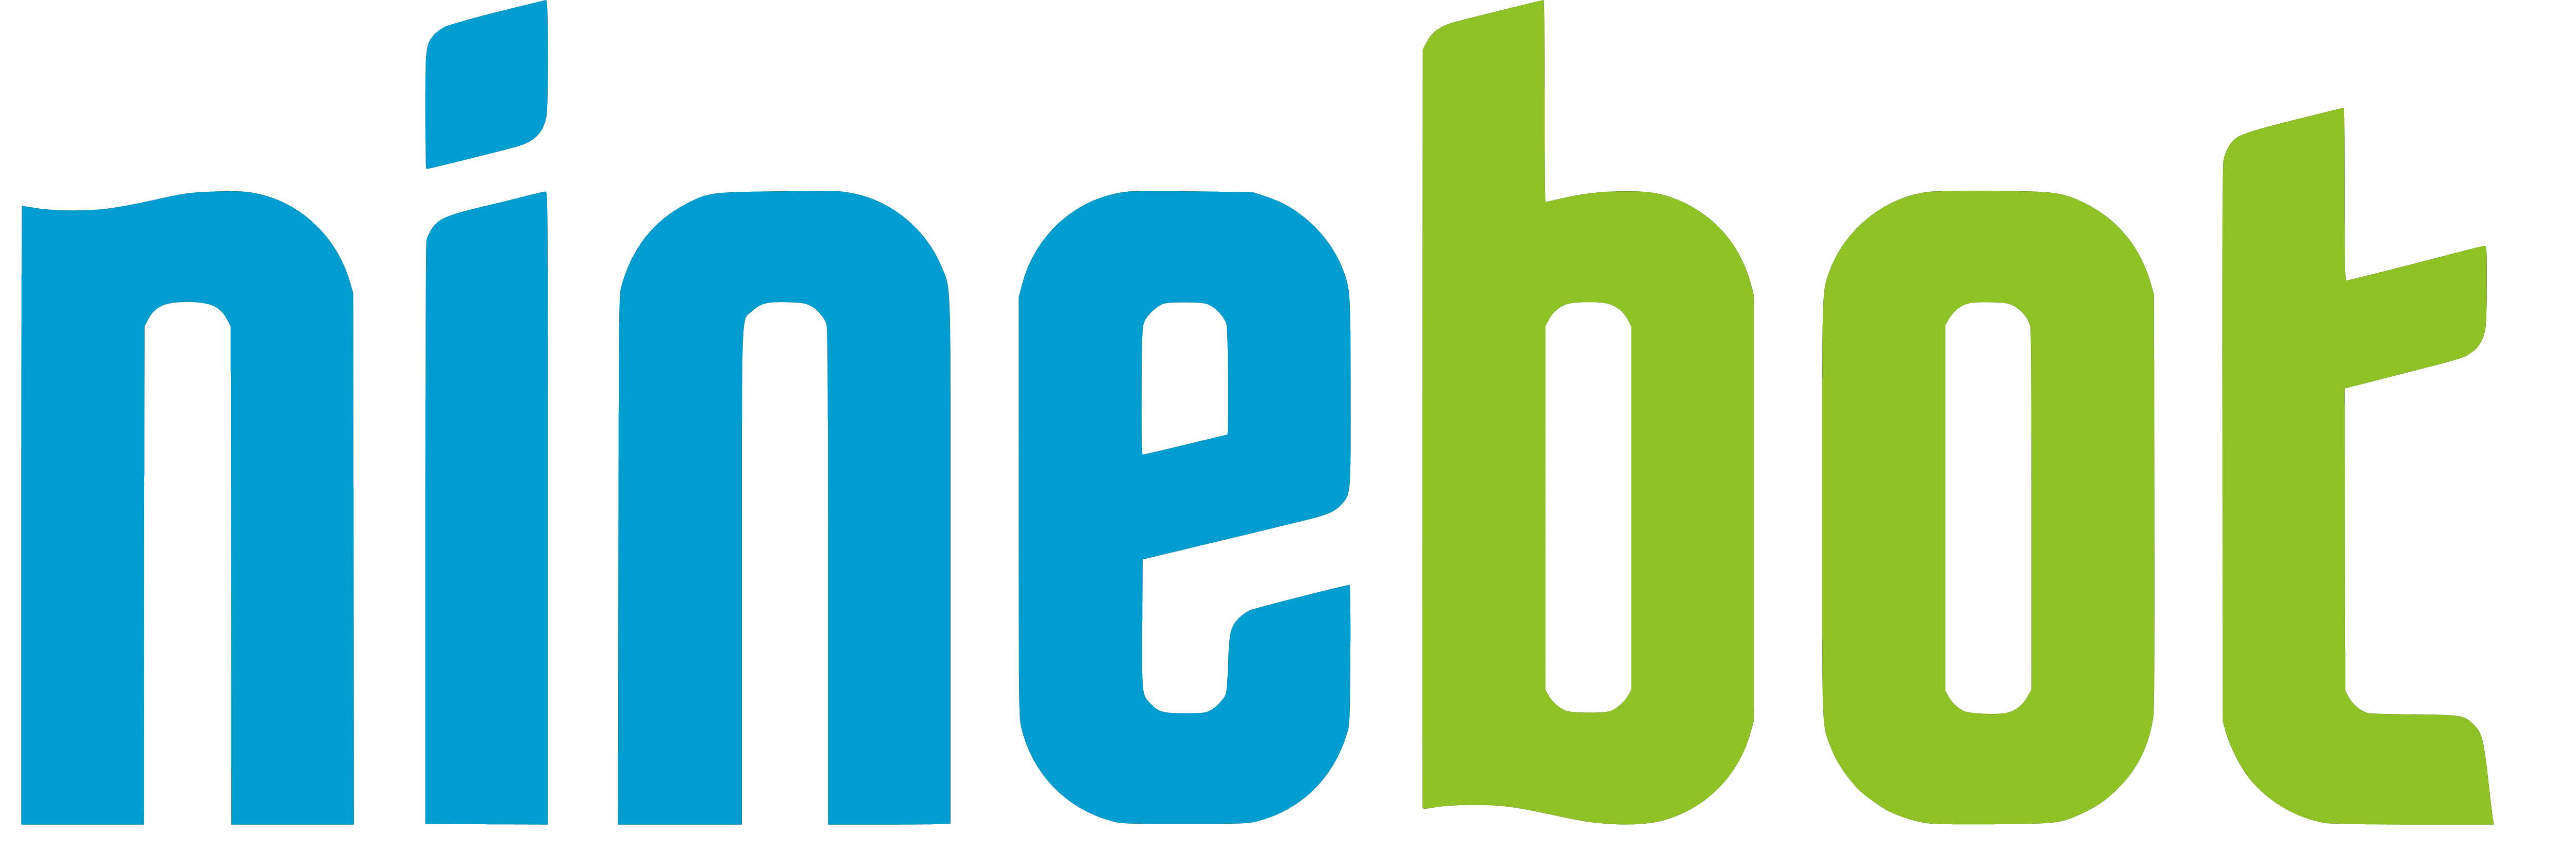 Ninebot Segway логотип